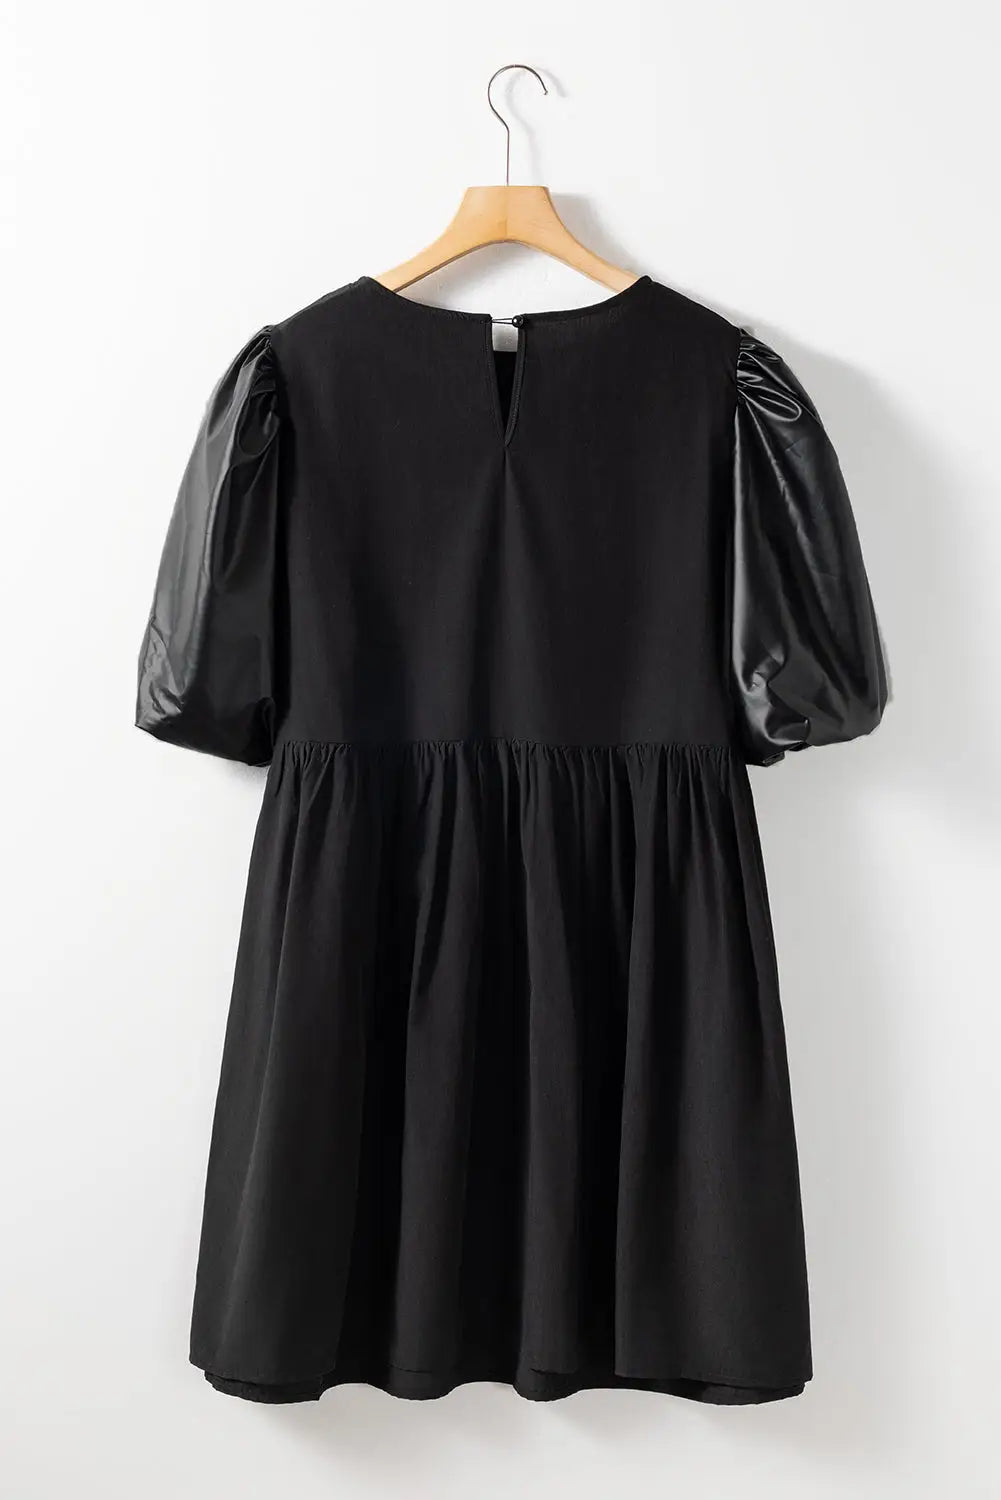 Black plus size half puff sleeve swing dress